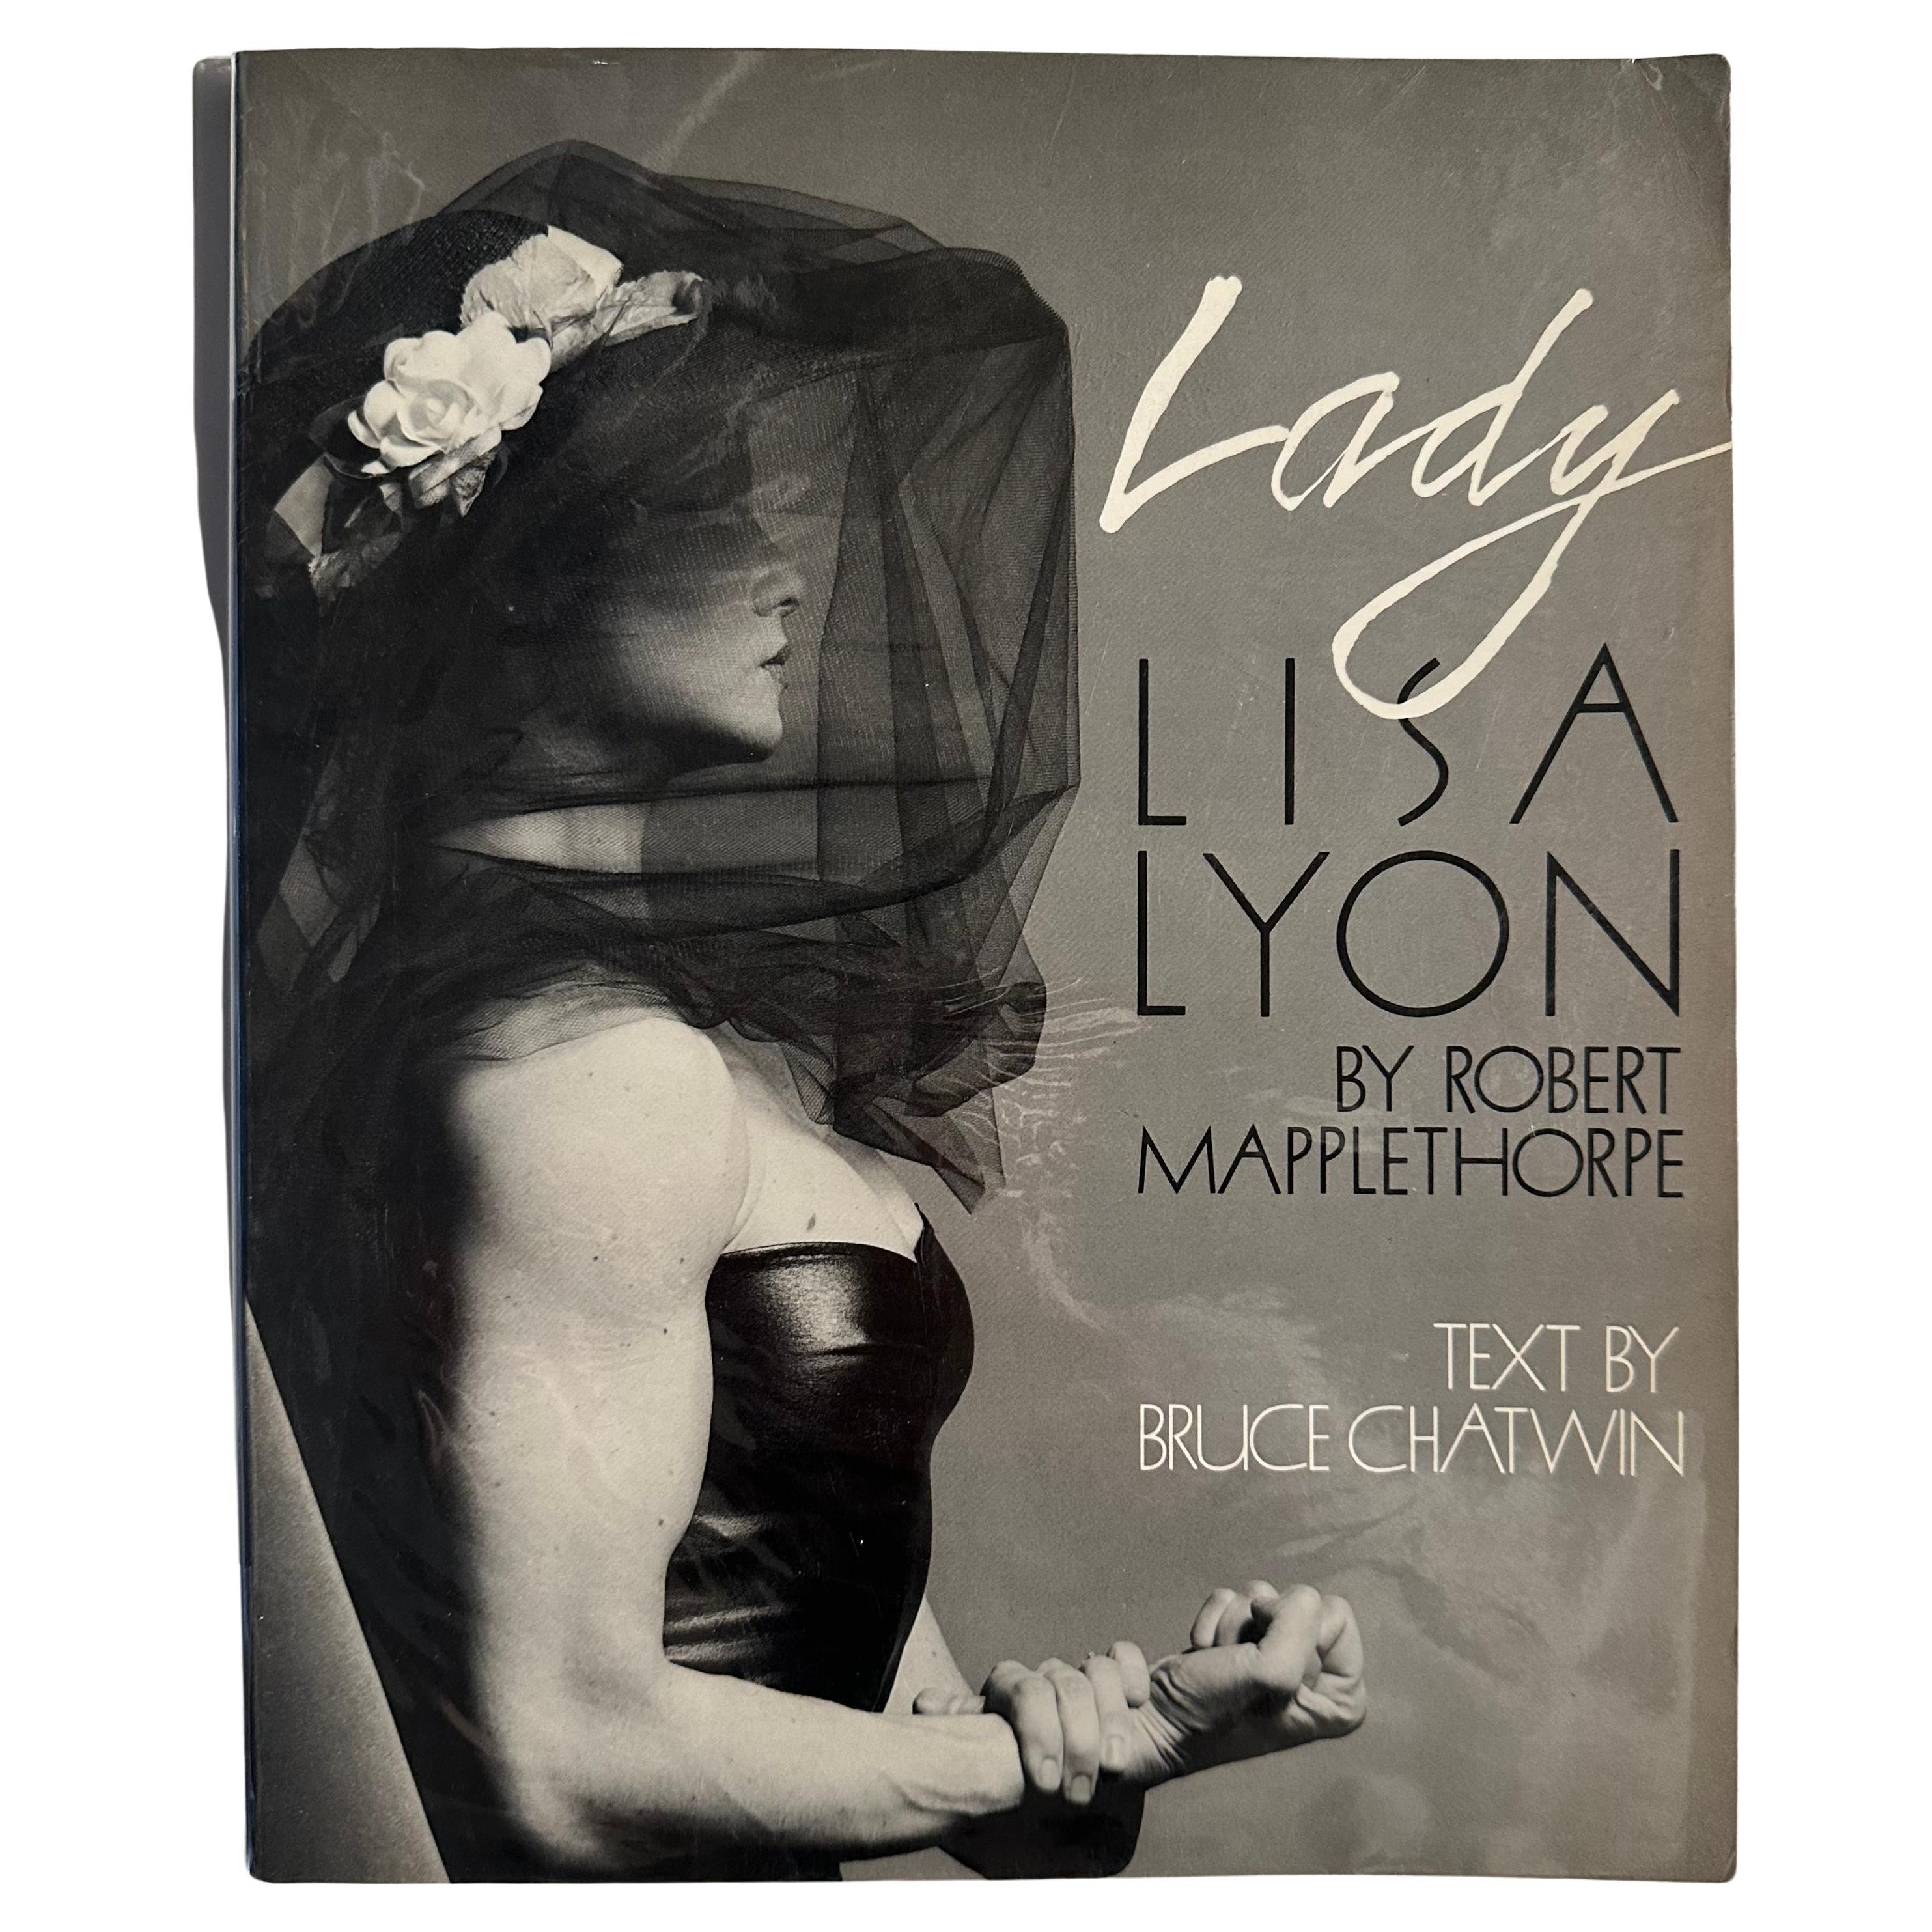 Lady Lisa Lyon by Robert Mapplethorpe